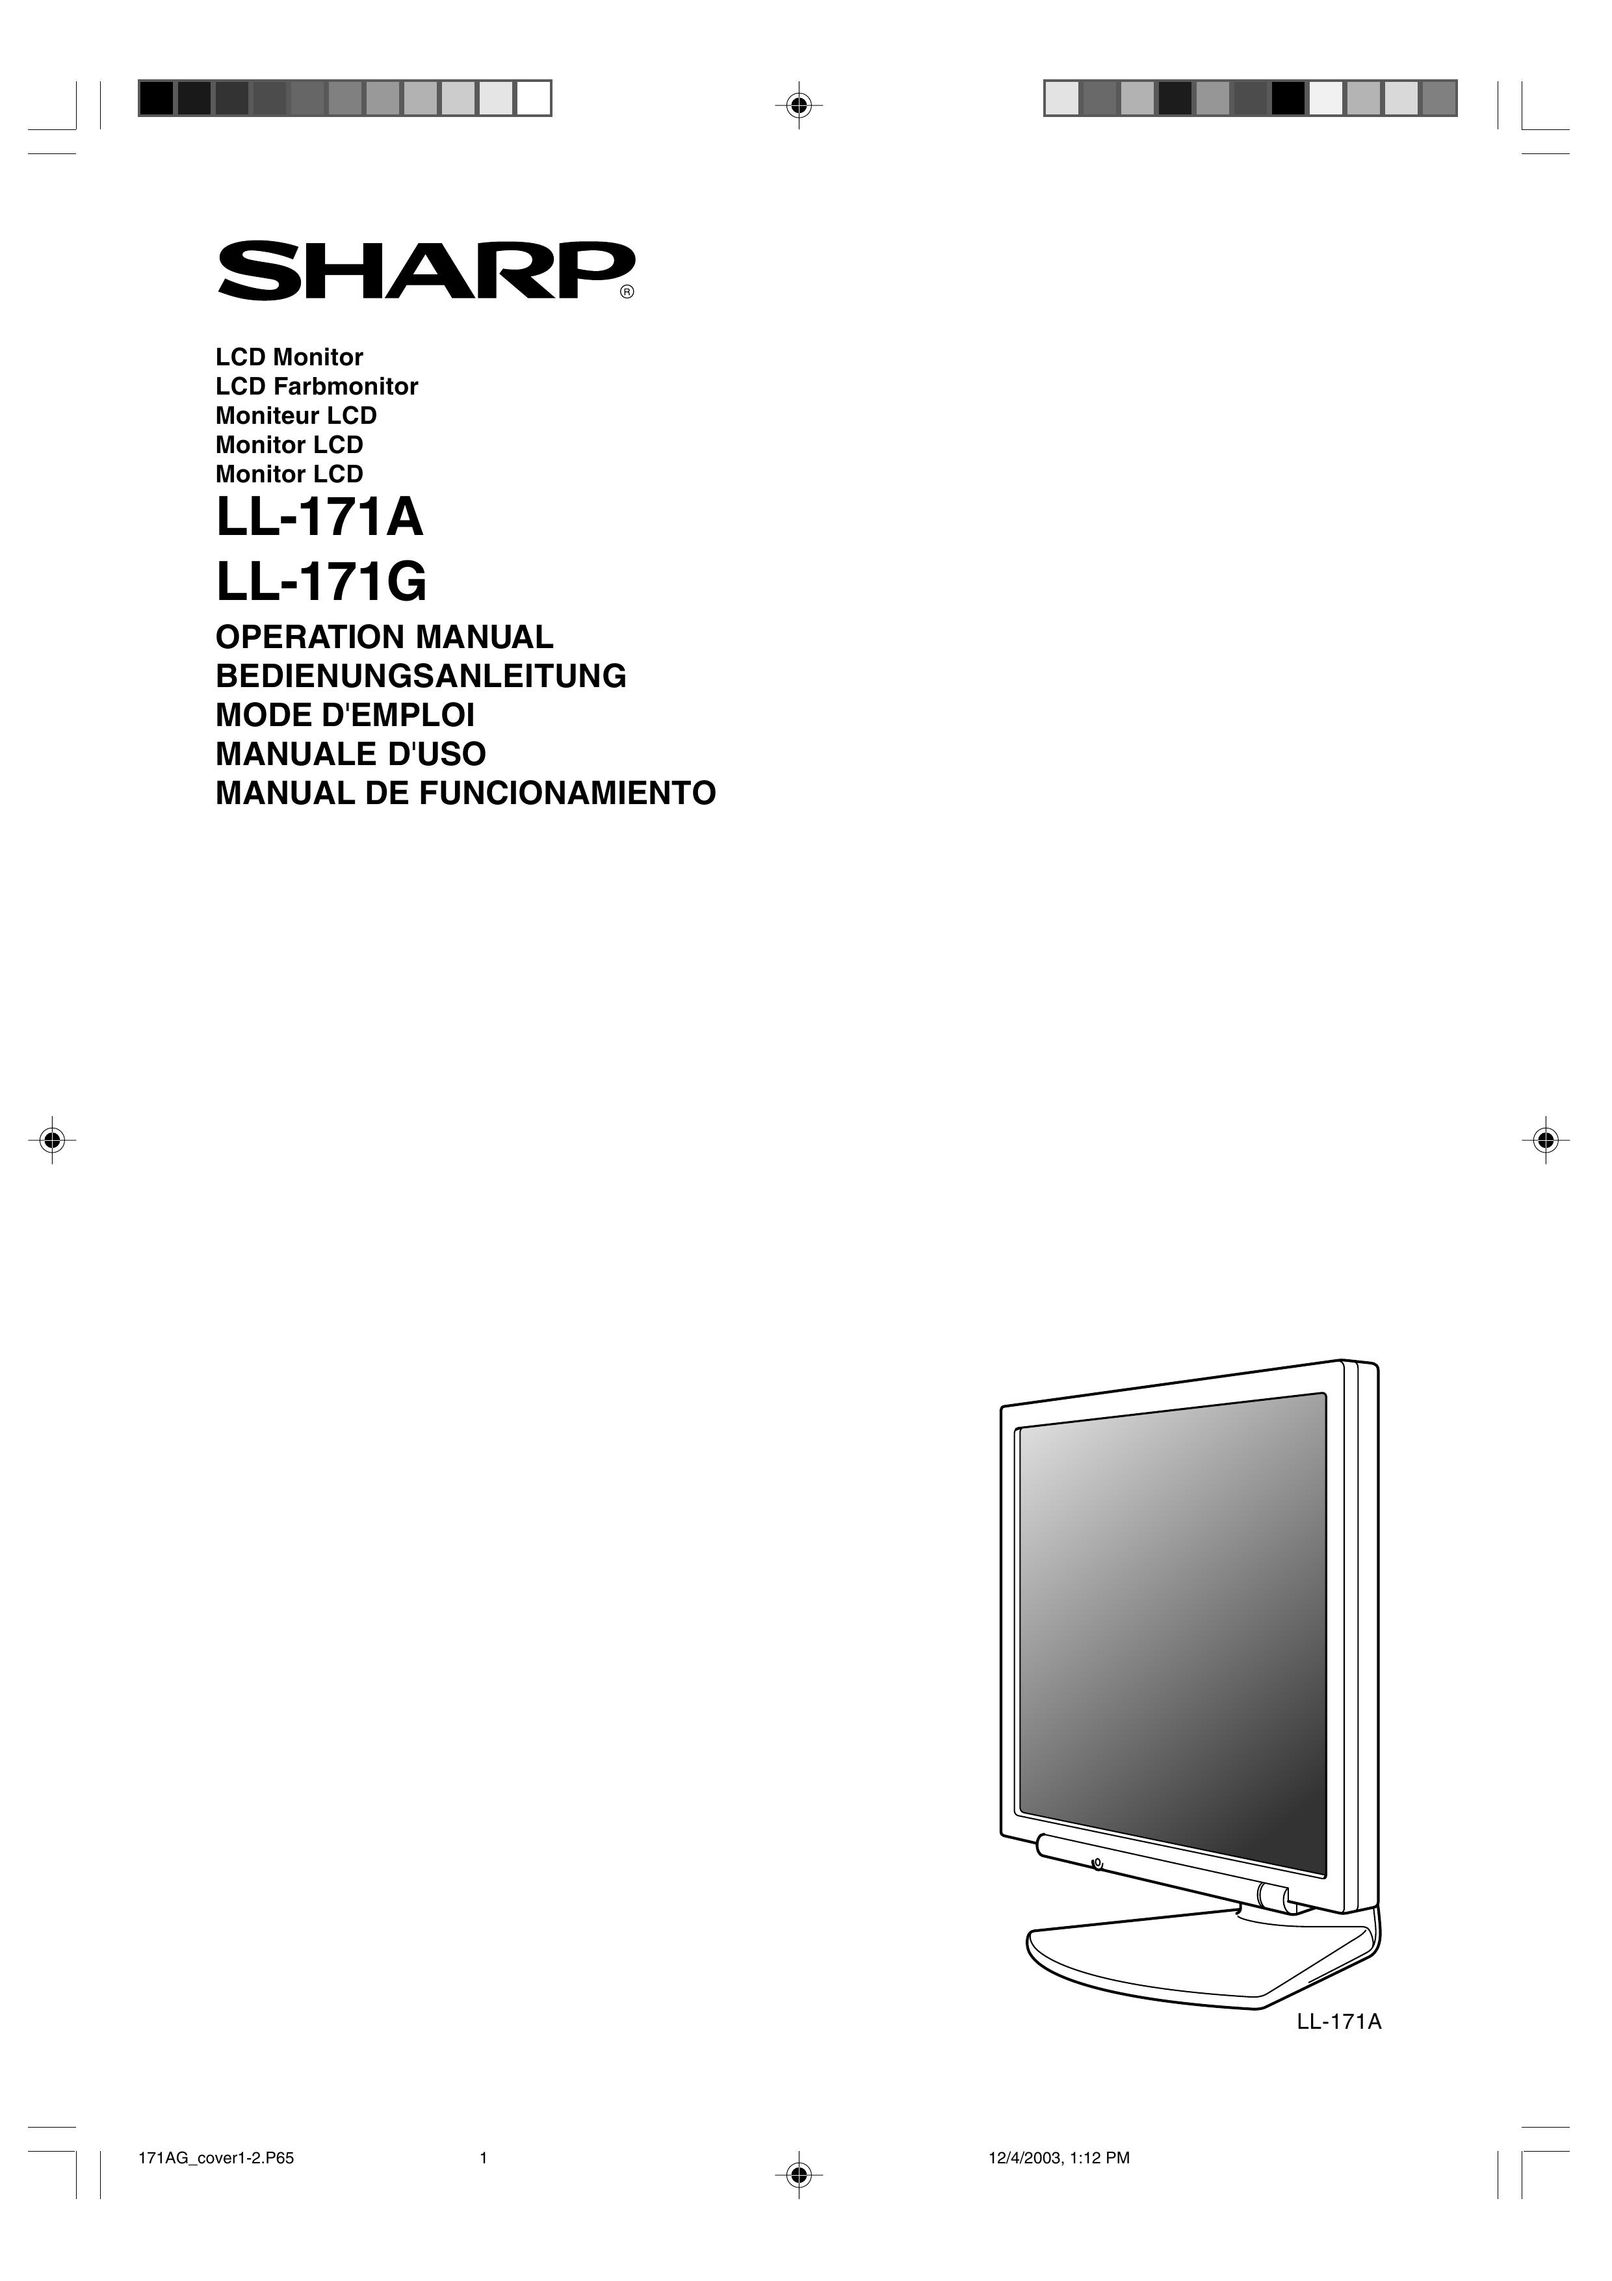 Sharp LL-171A Car Video System User Manual